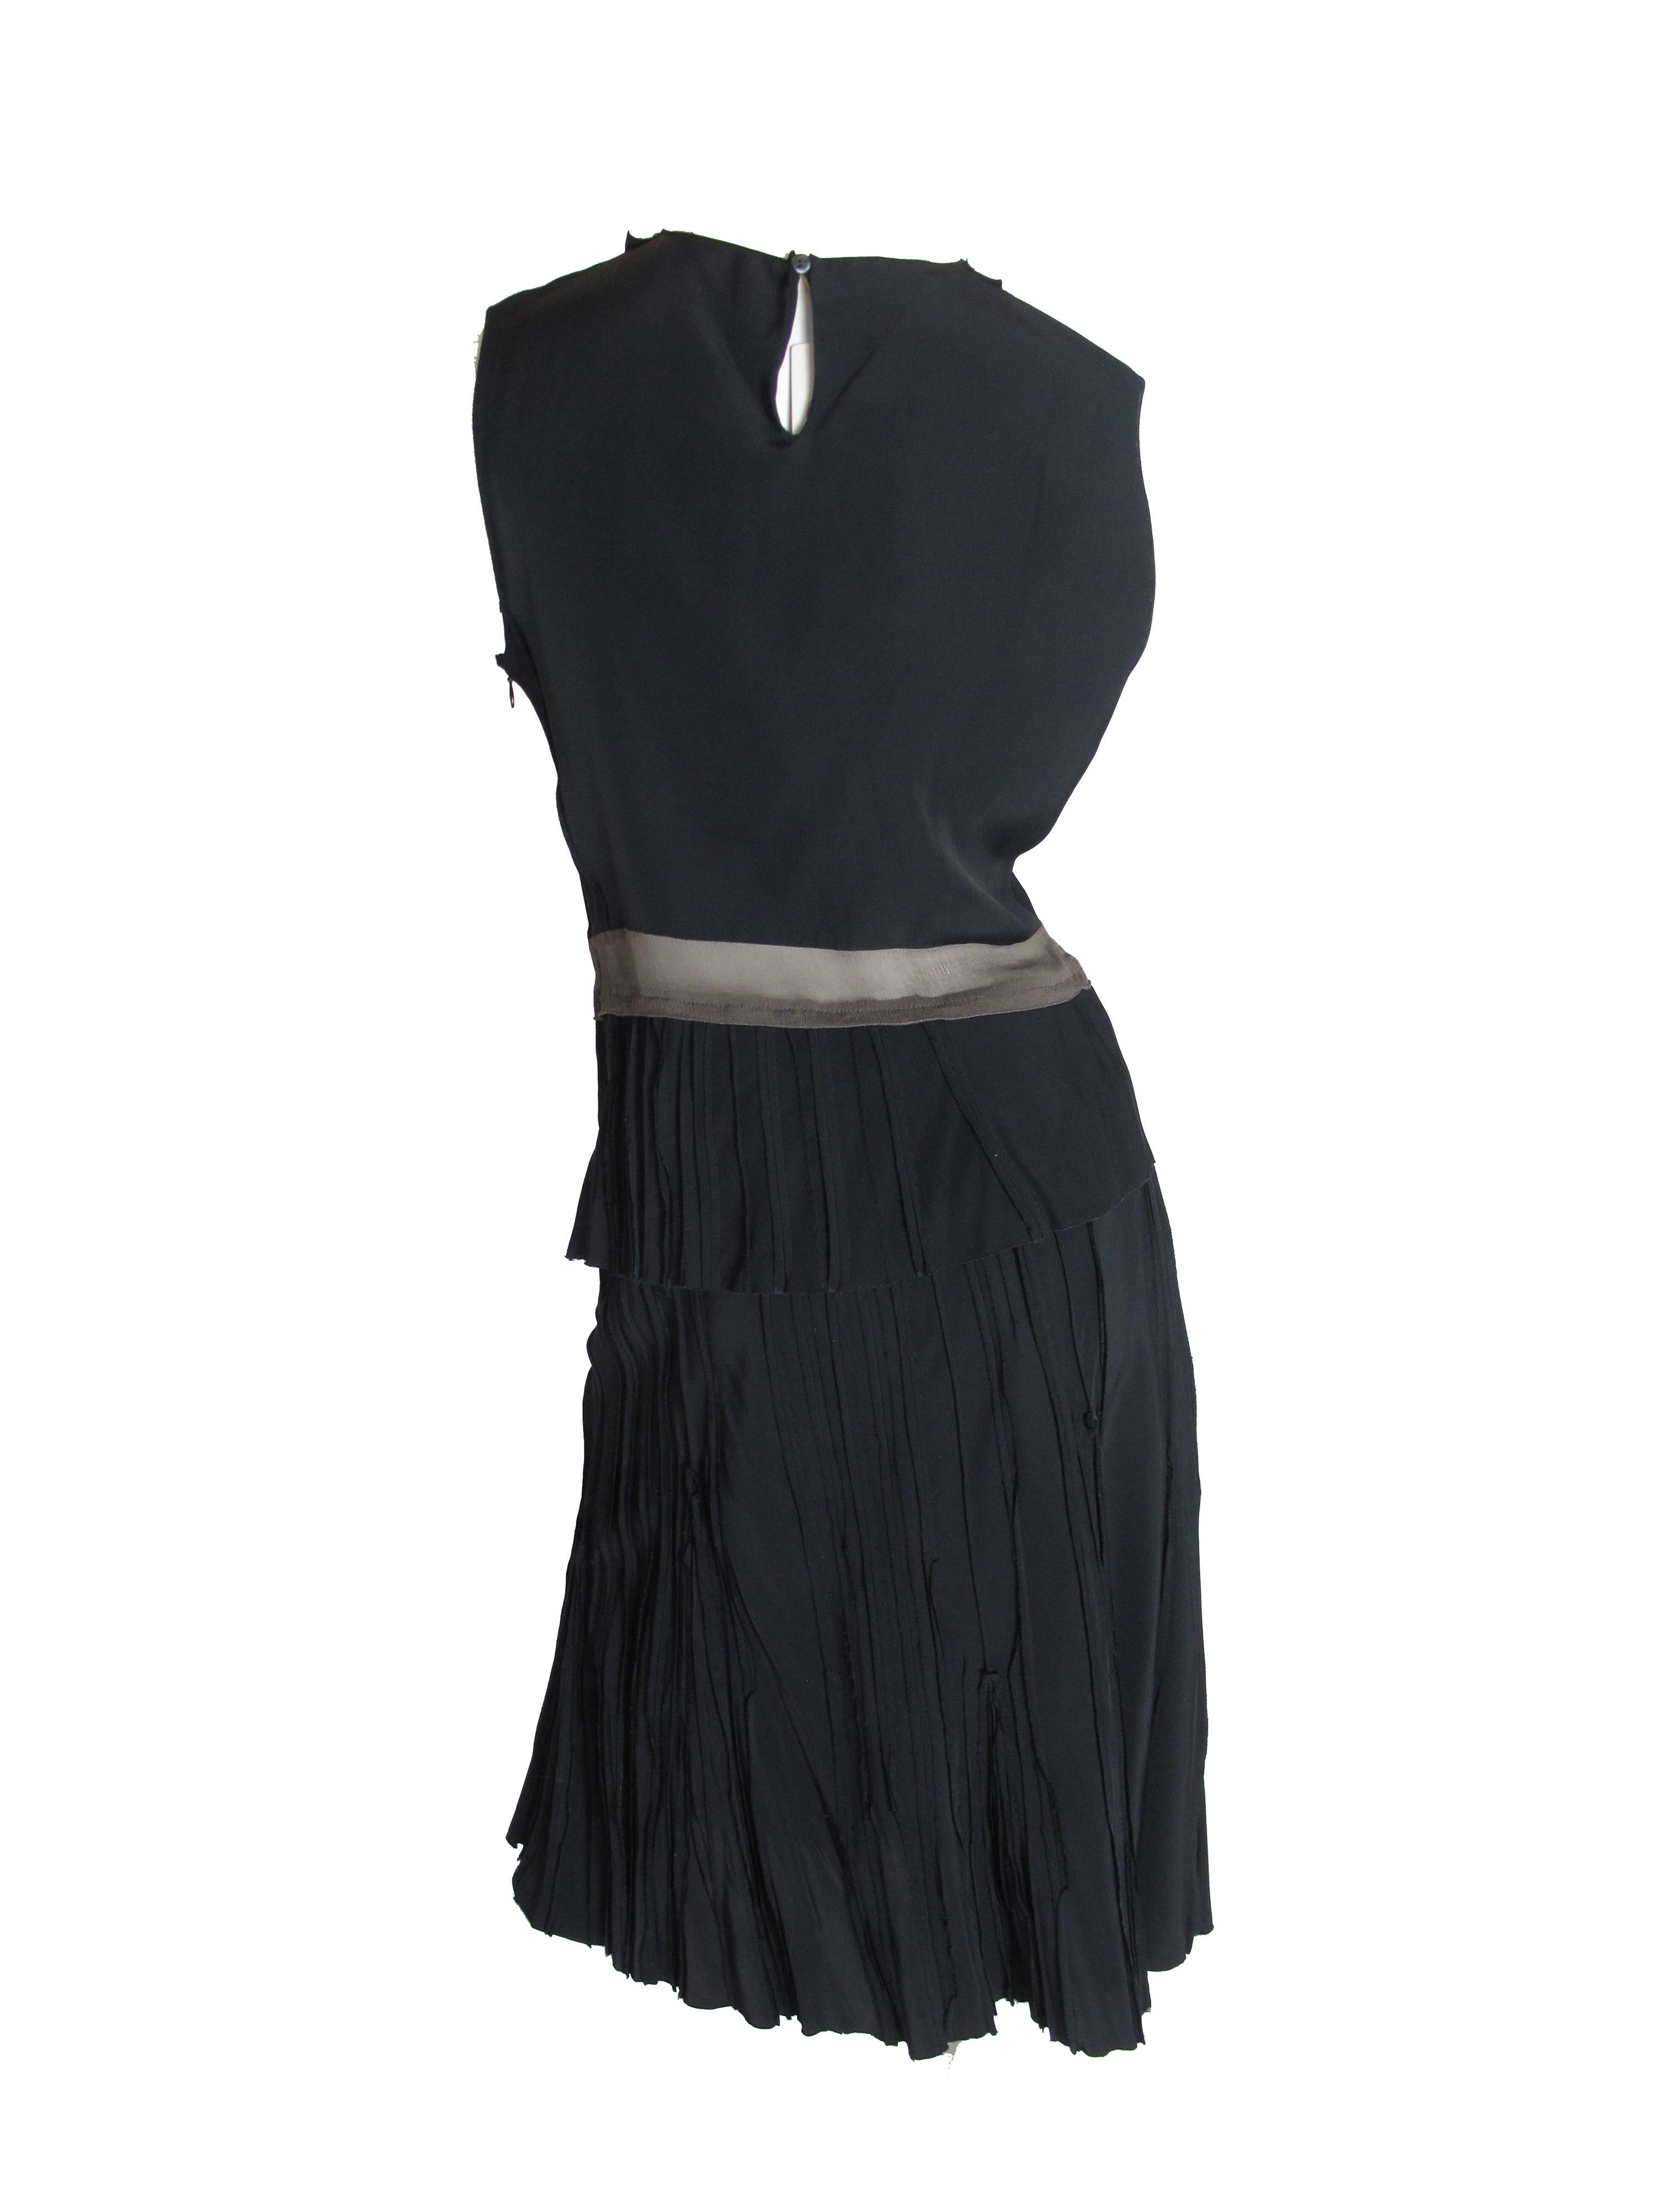 Prada silk top and skirt, 1990s 1